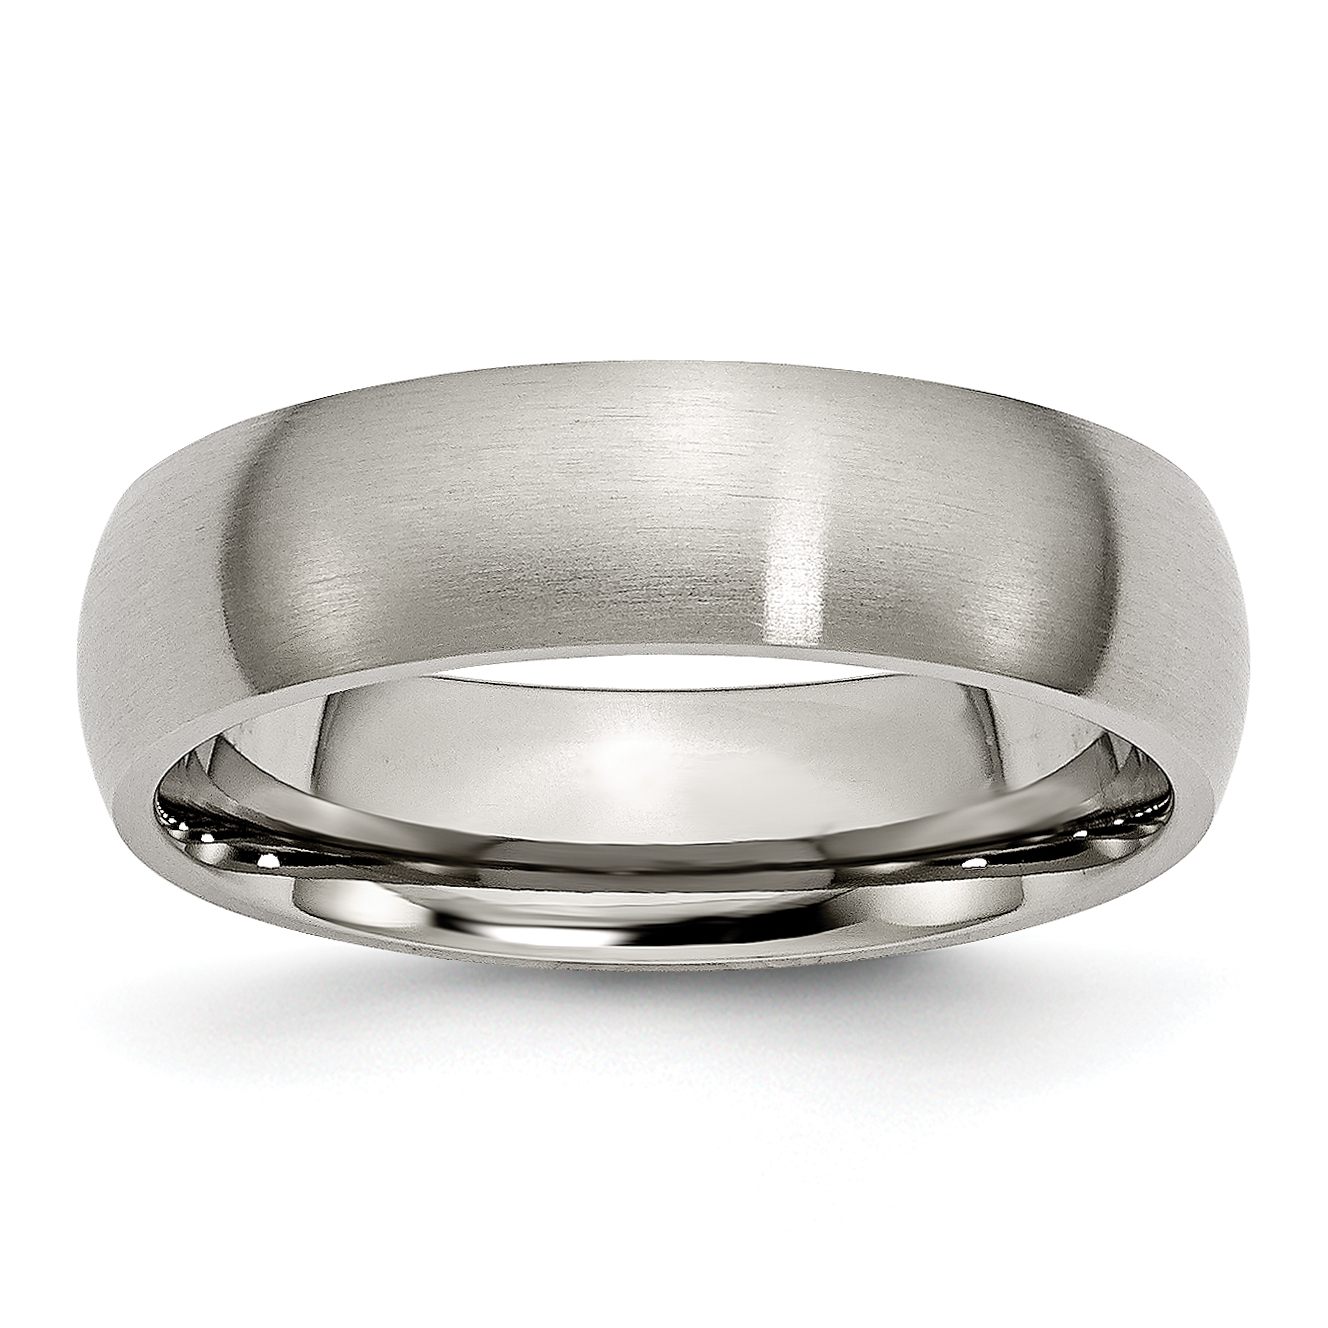 Gemini Groom & Bride Two Tone Black & Silver Brush & Polish Titanium Wedding Ring Set Width 7mm & 5mm Men Ring Size 10 11 Women Ring Size